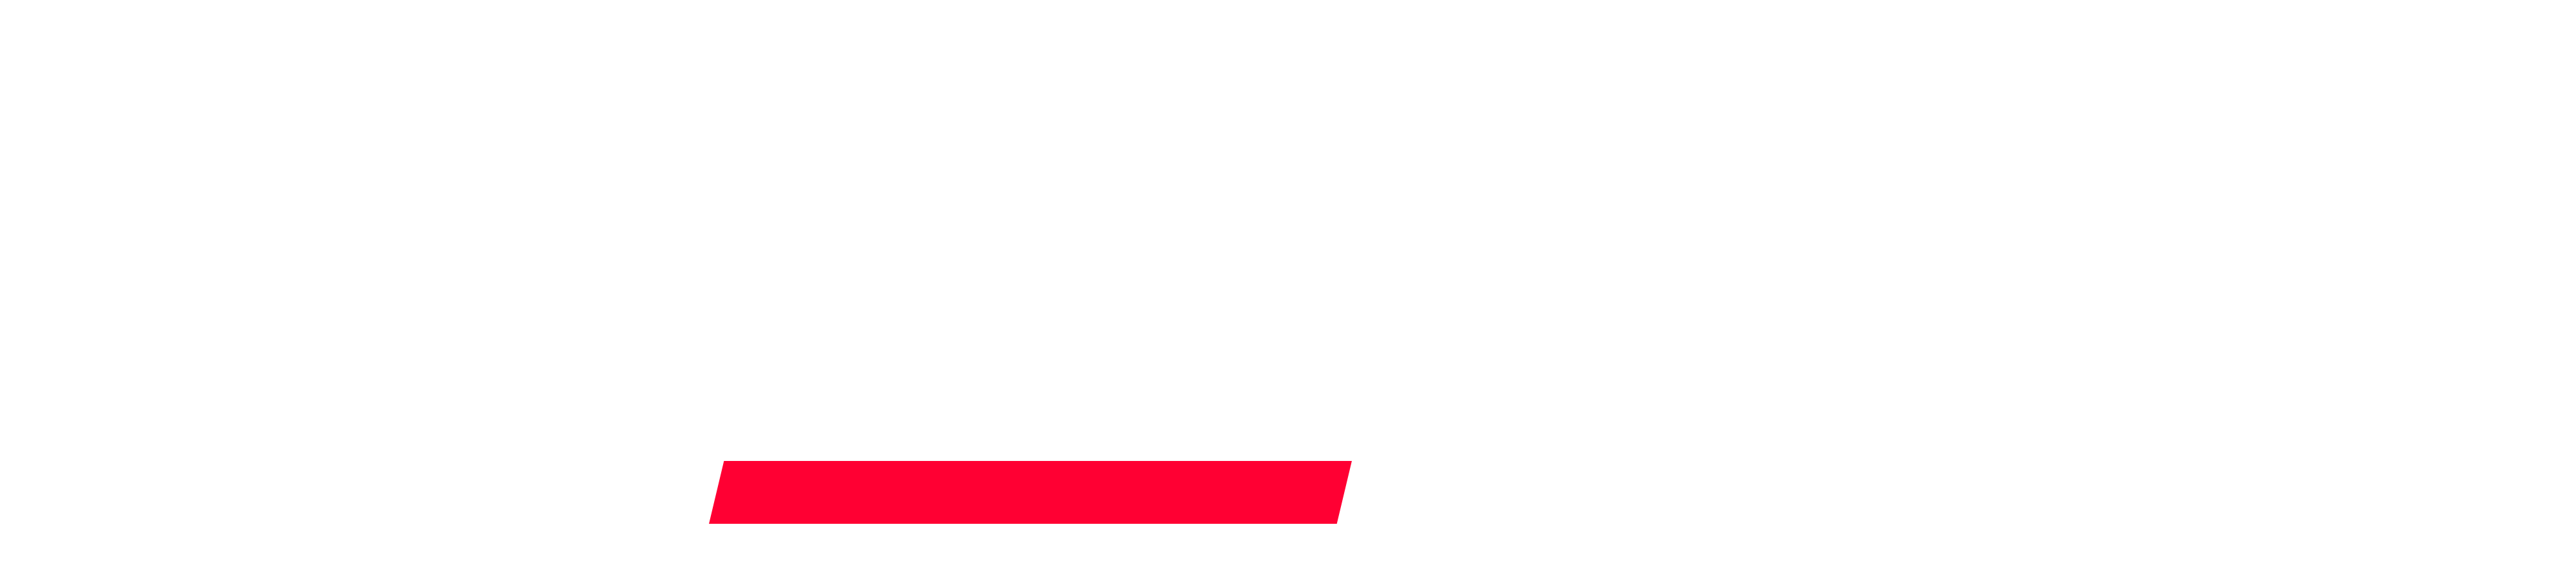 The byte logo